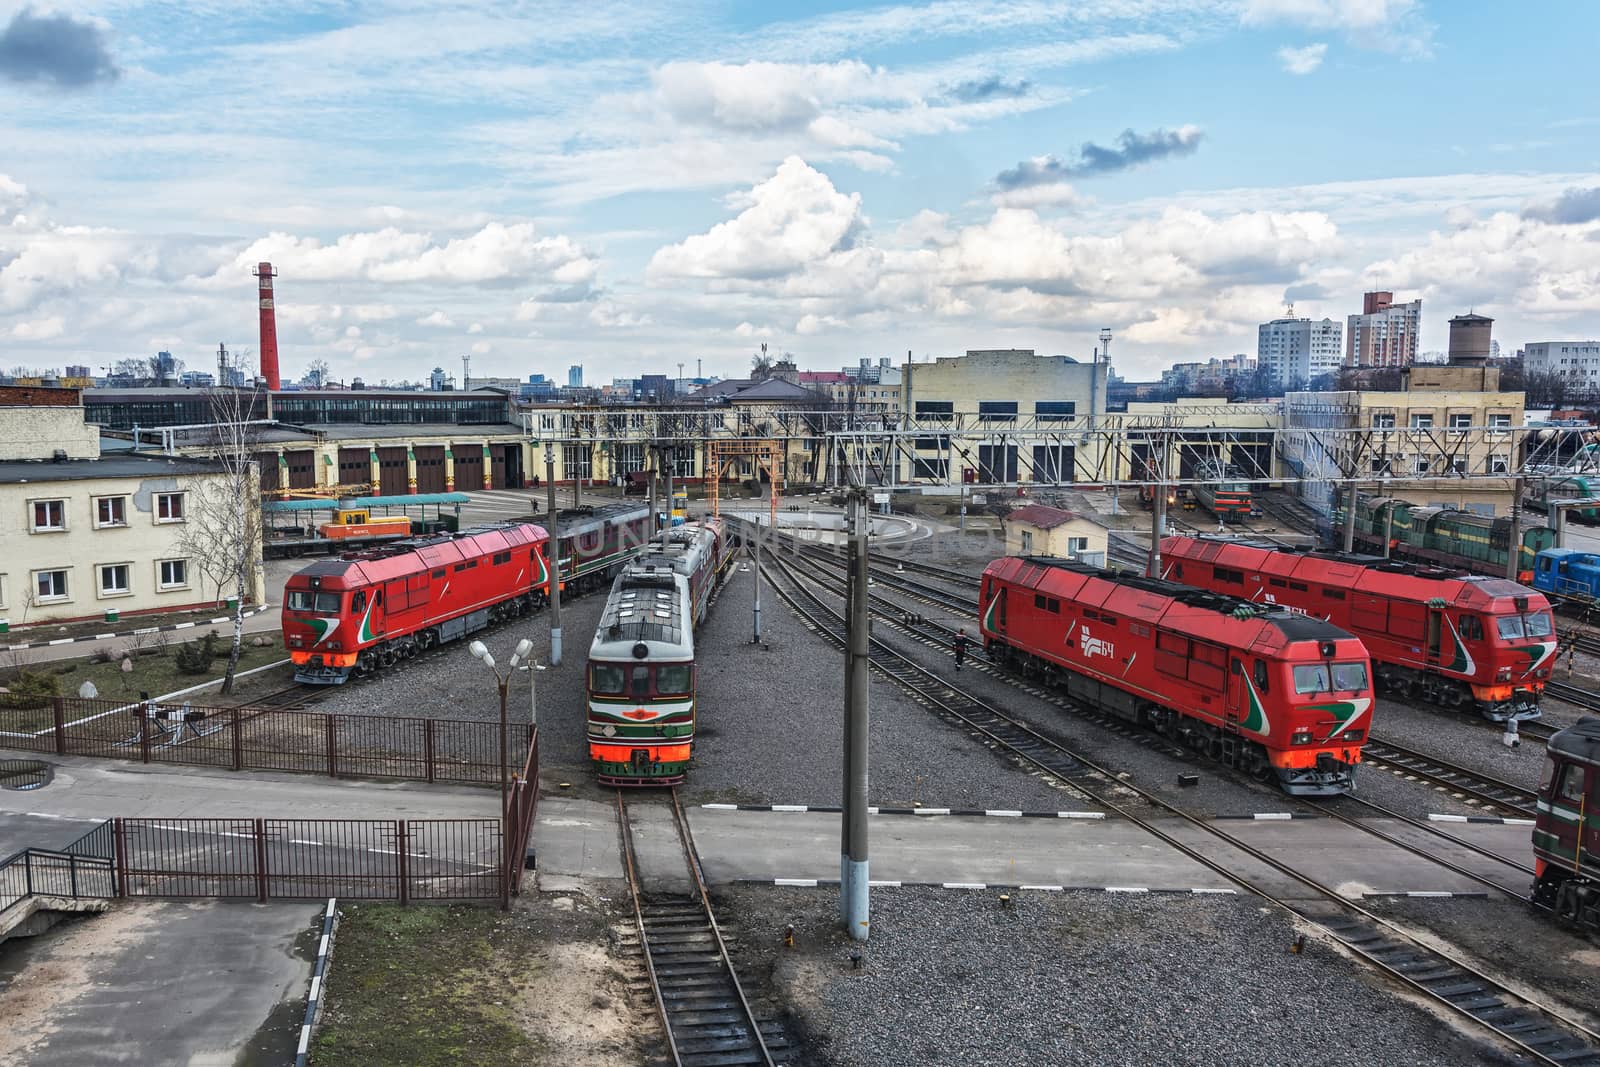 Belarus, Minsk - 20.03.2017: Diesel locomotives in the locomotive depot of the railway